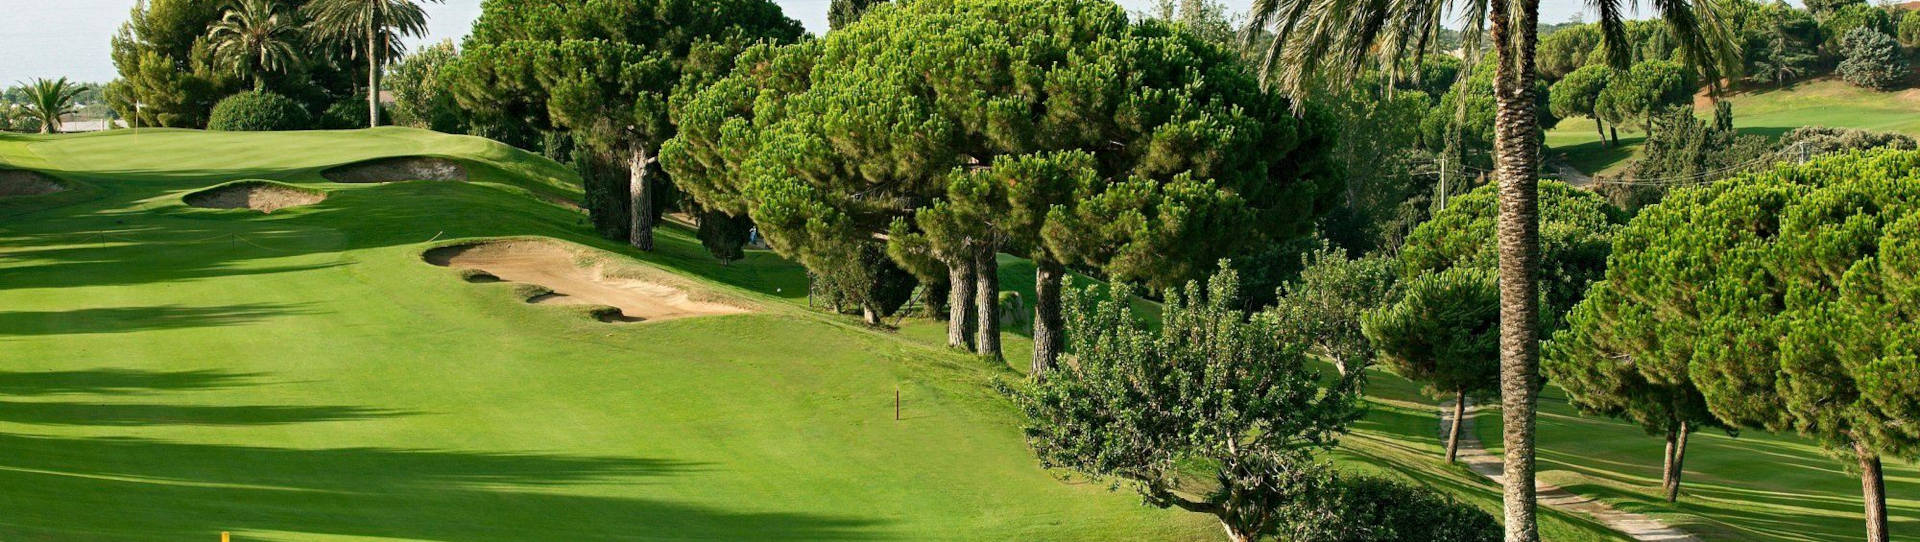 Spain golf holidays - Barcelona 5 Golf Courses Golf Pass - Photo 2